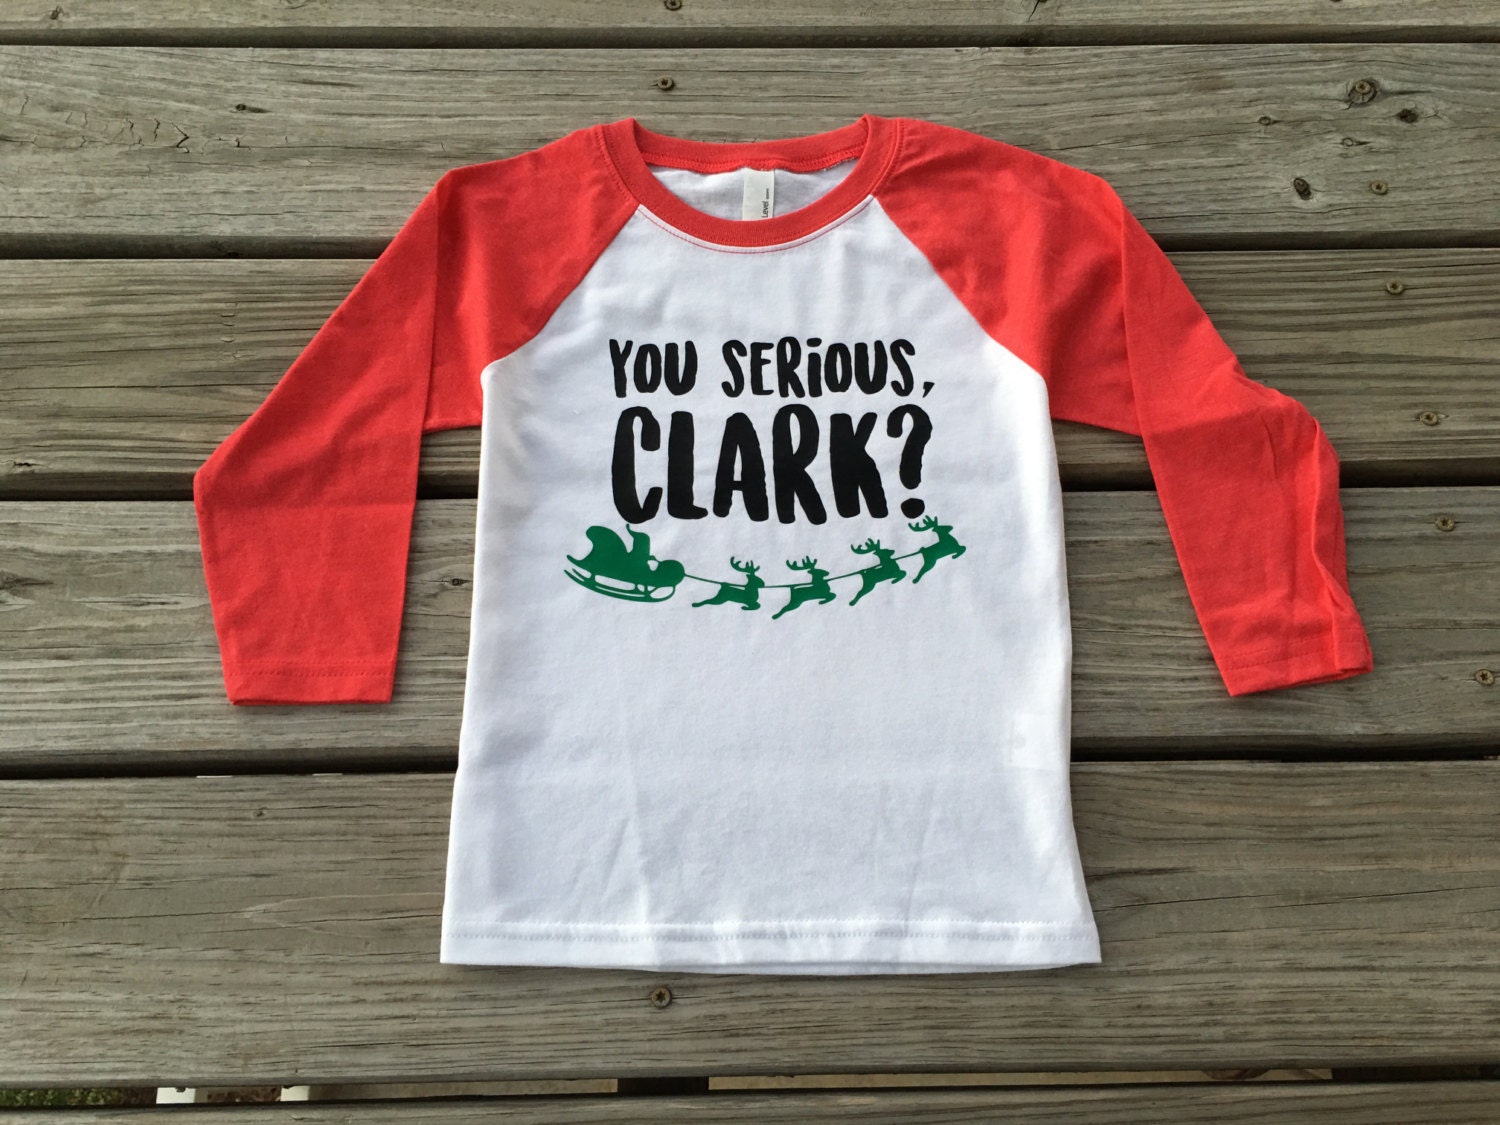 You serious Clark National lampoon's christmas shirt